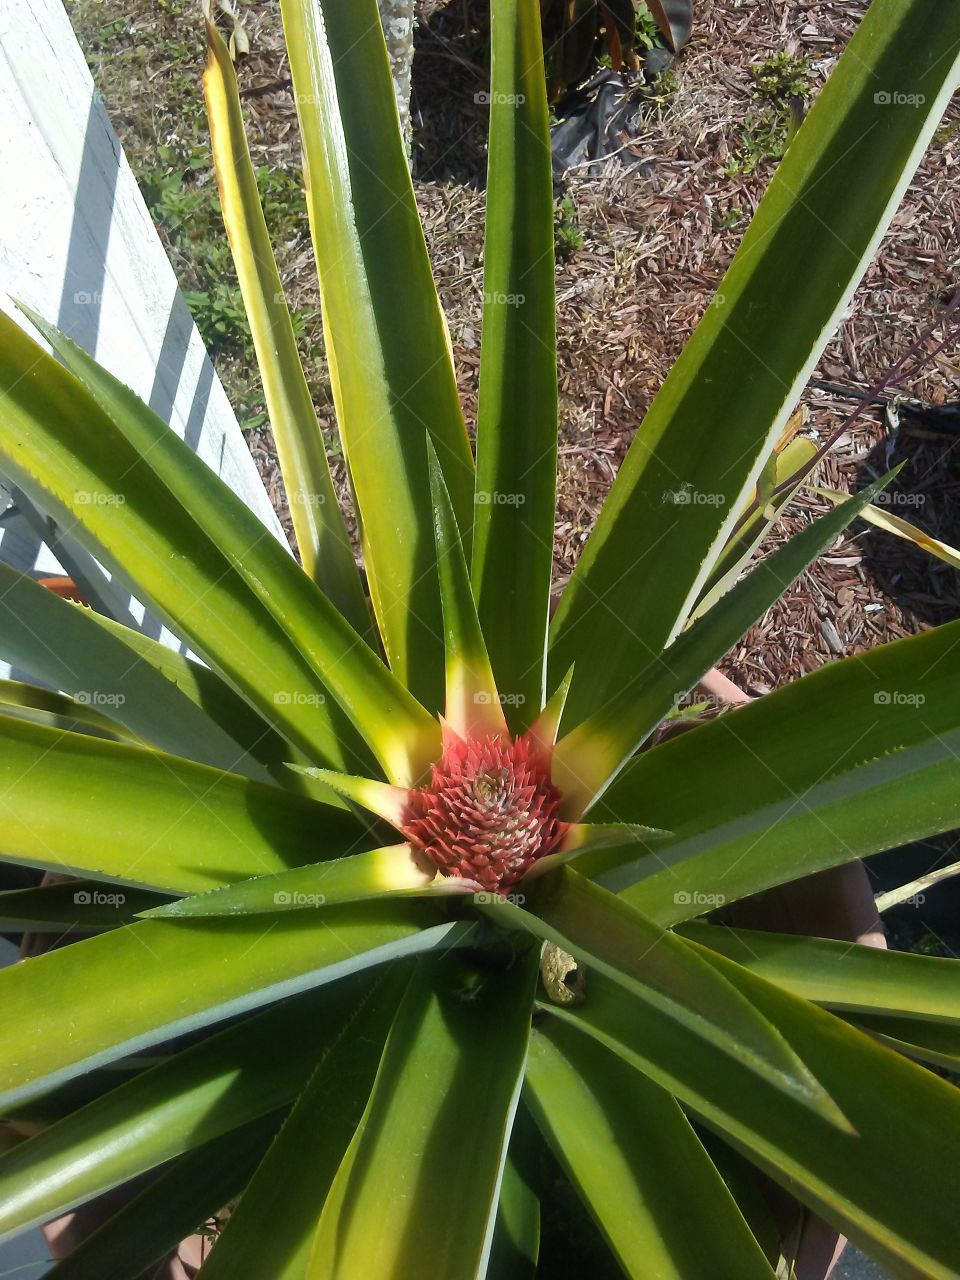 Baby pineape